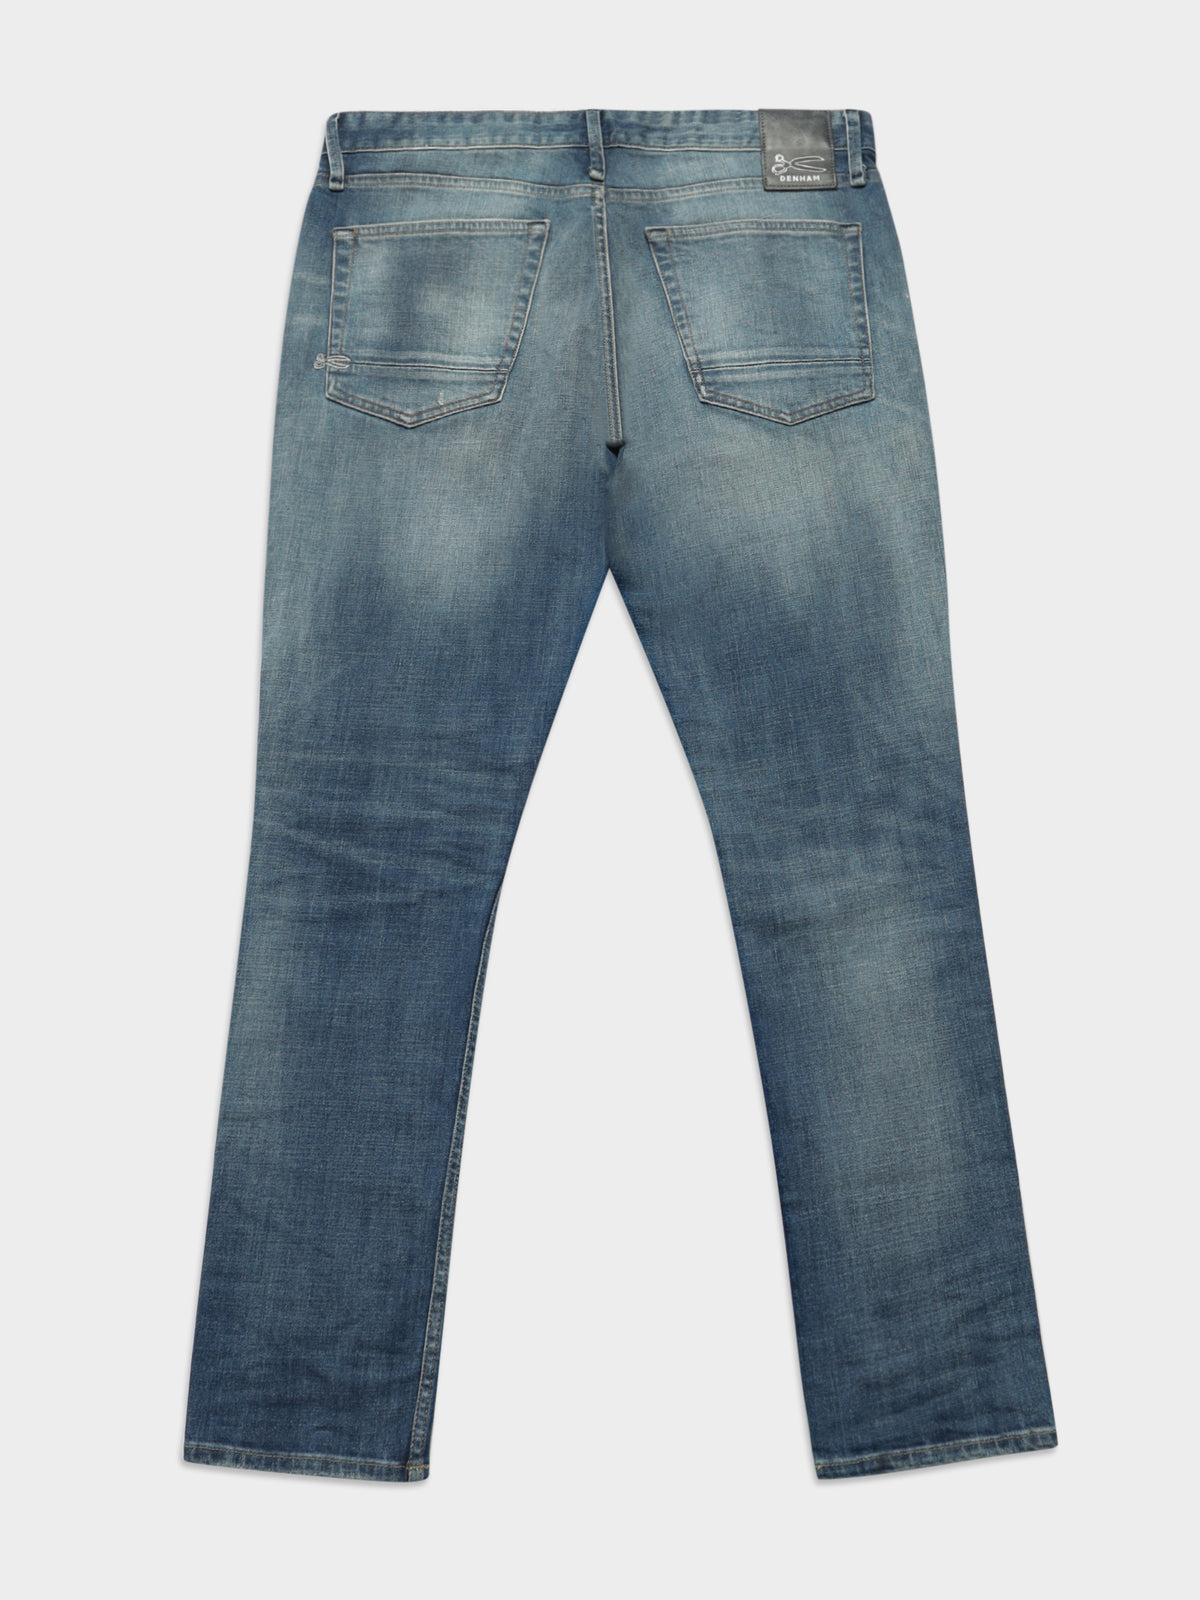 Shank Ava 821 Denim Jeans in Blue